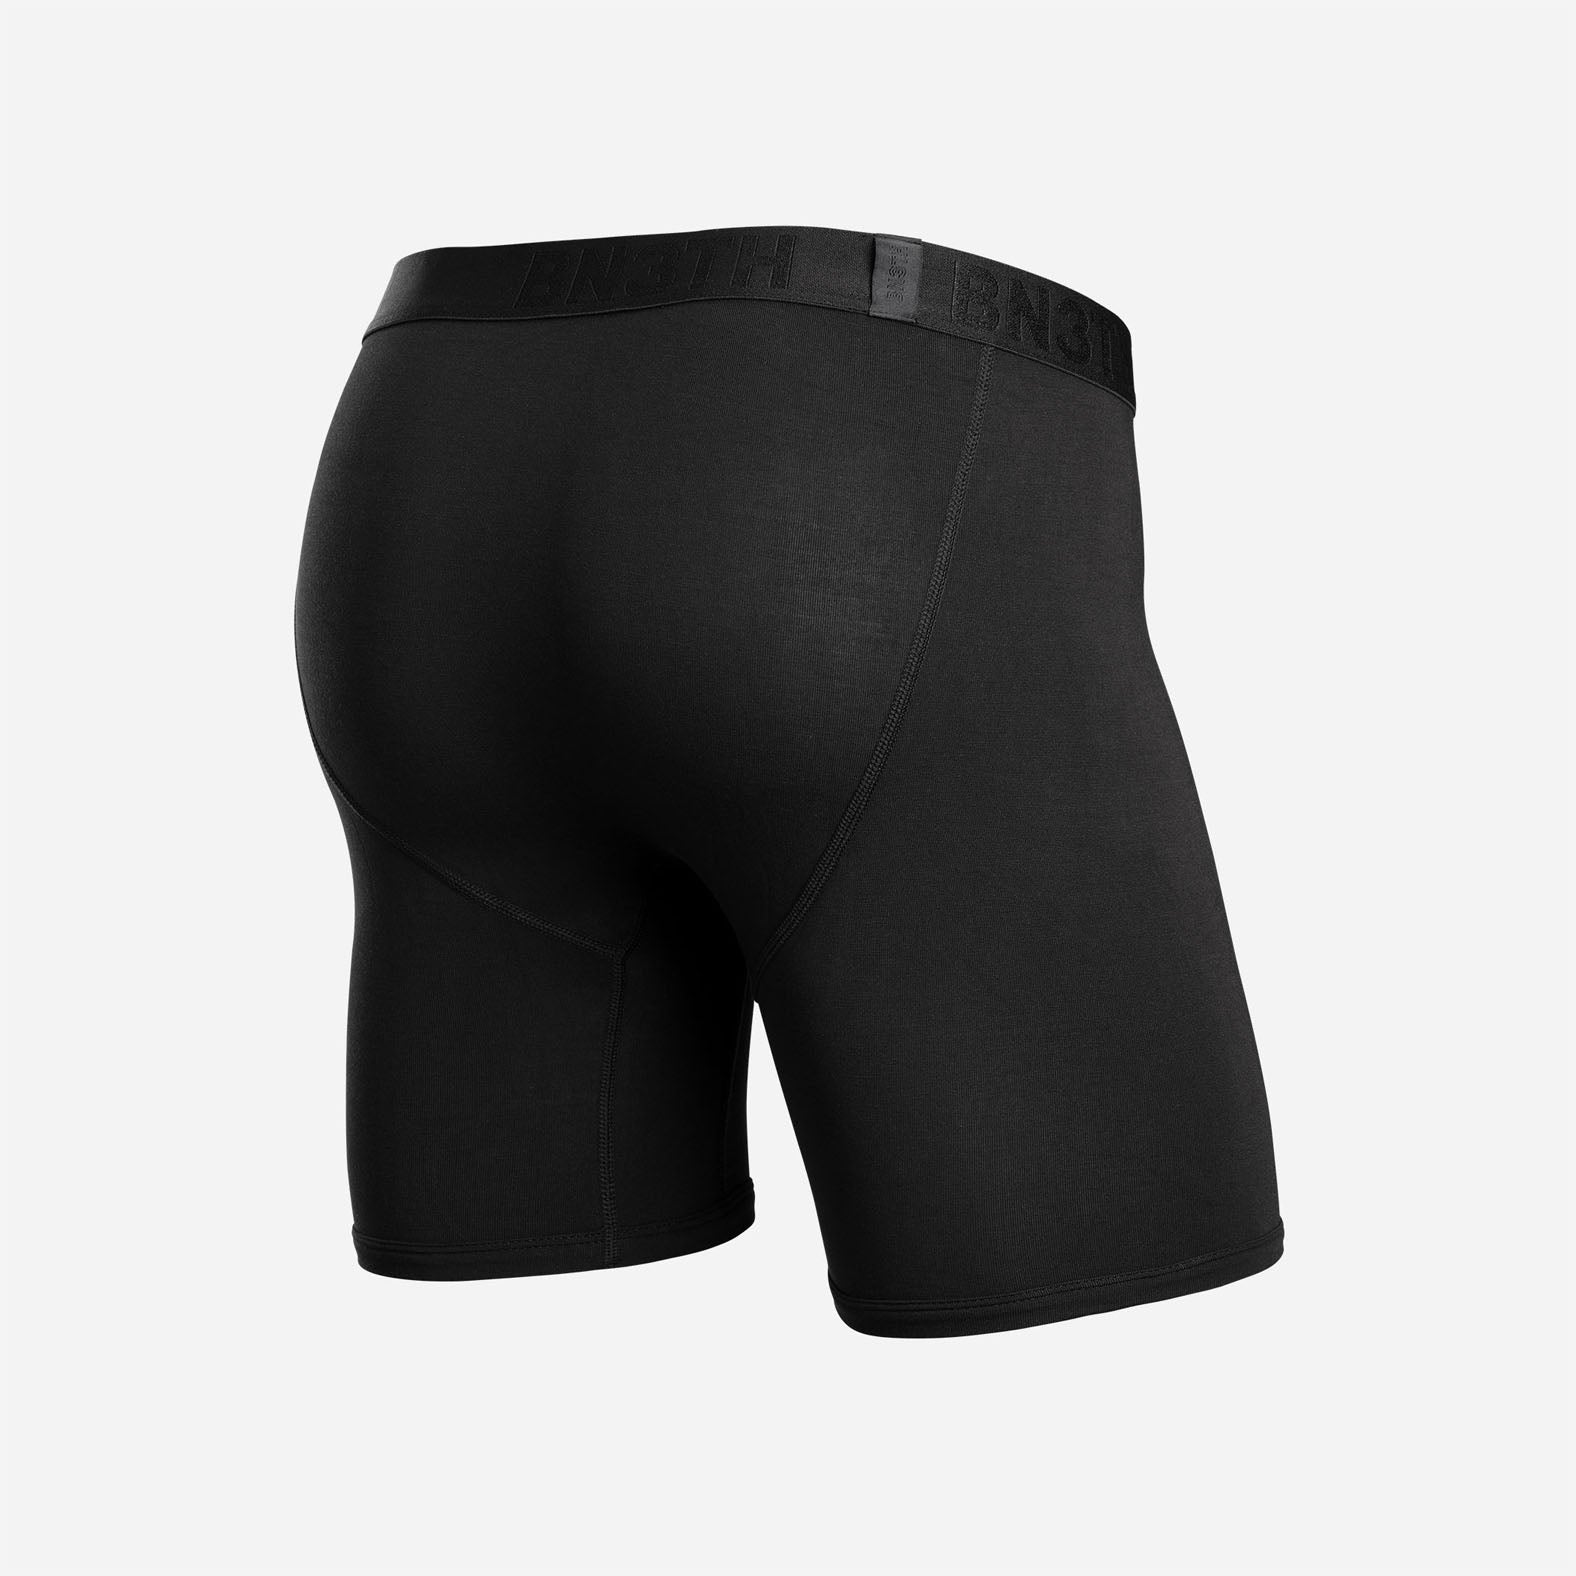 Classic Basic Men’s Fashion Luxurious Underwear Low Waist Cozy Boxer Brief  Black